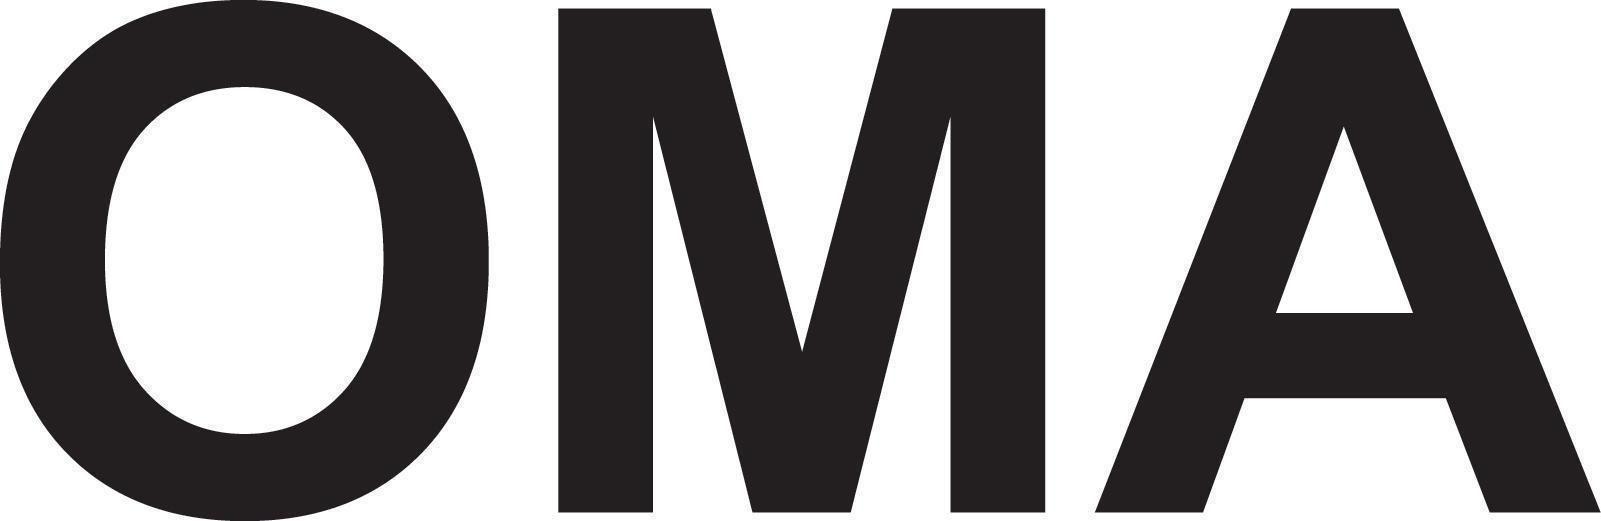 Oma Logo - Office for Metropolitan Architecture Competitors, Revenue and ...